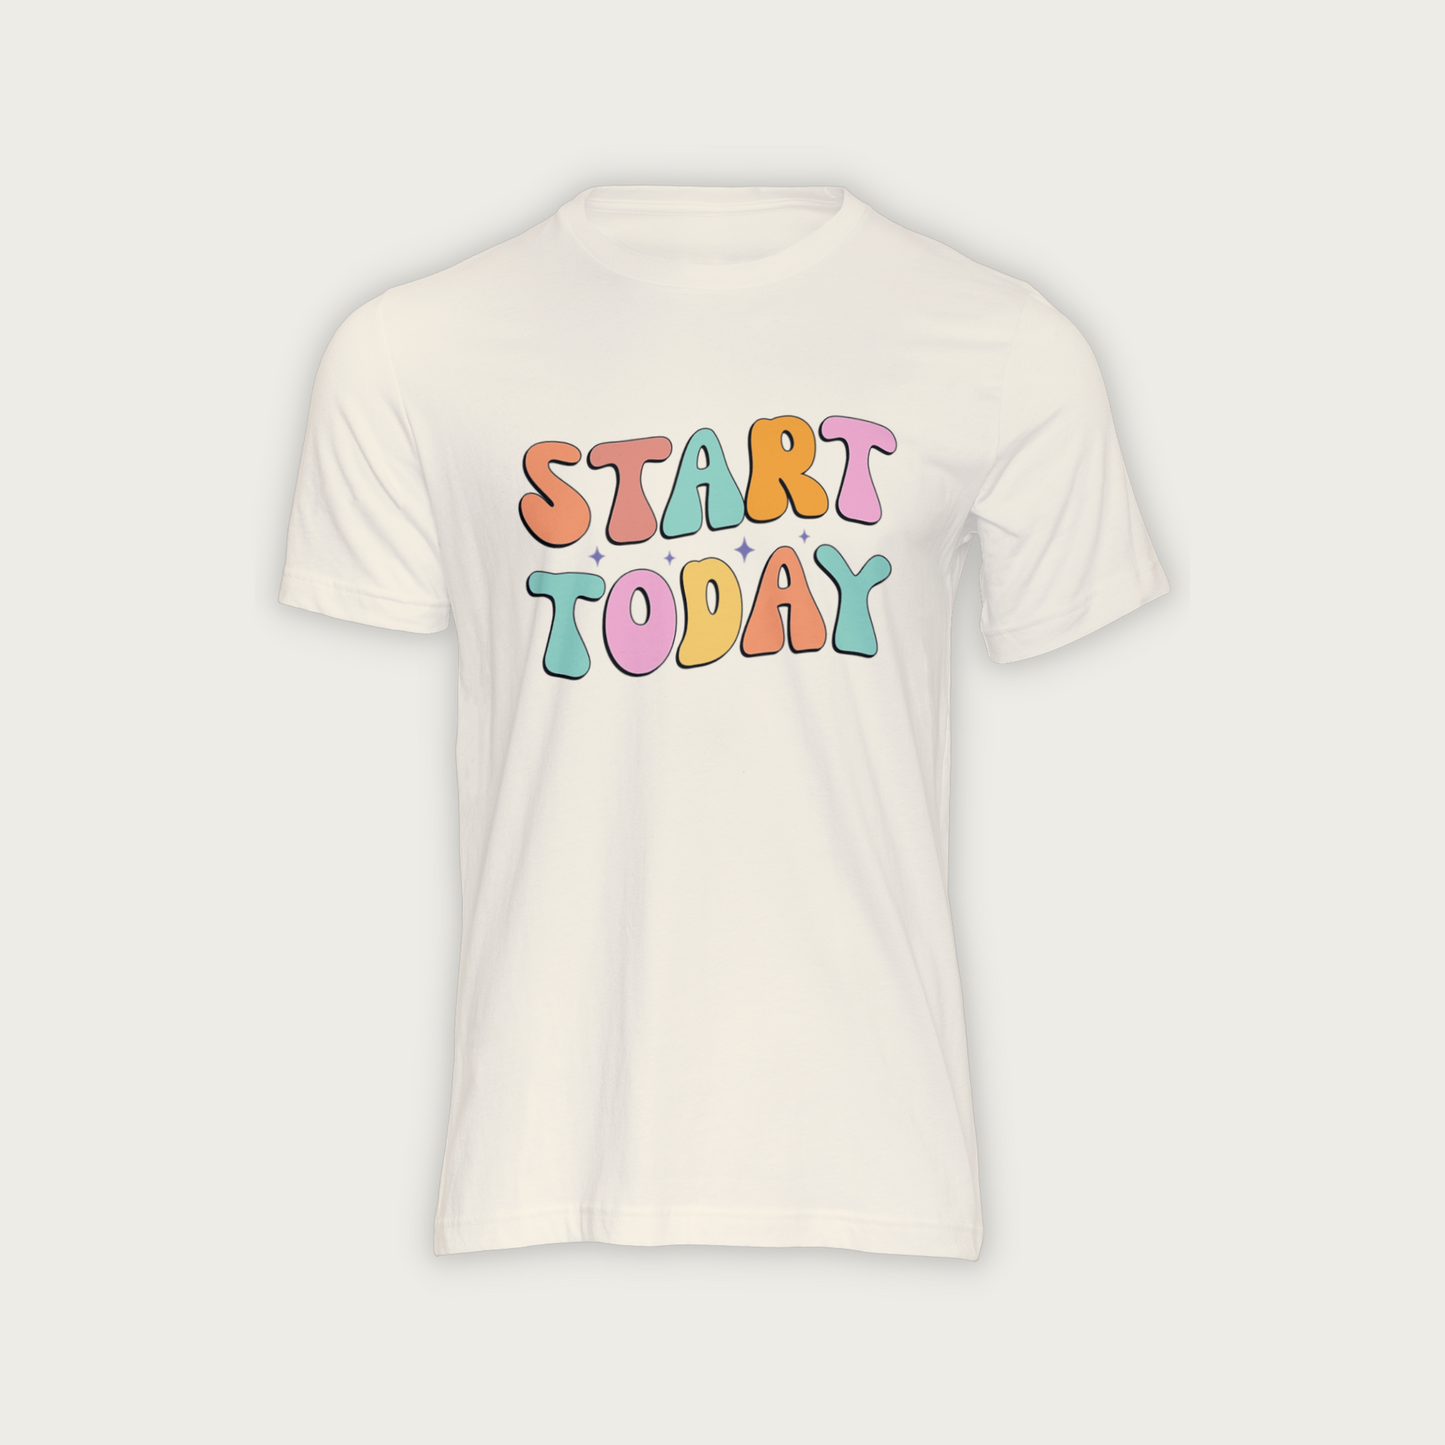 Start Today - Shirt